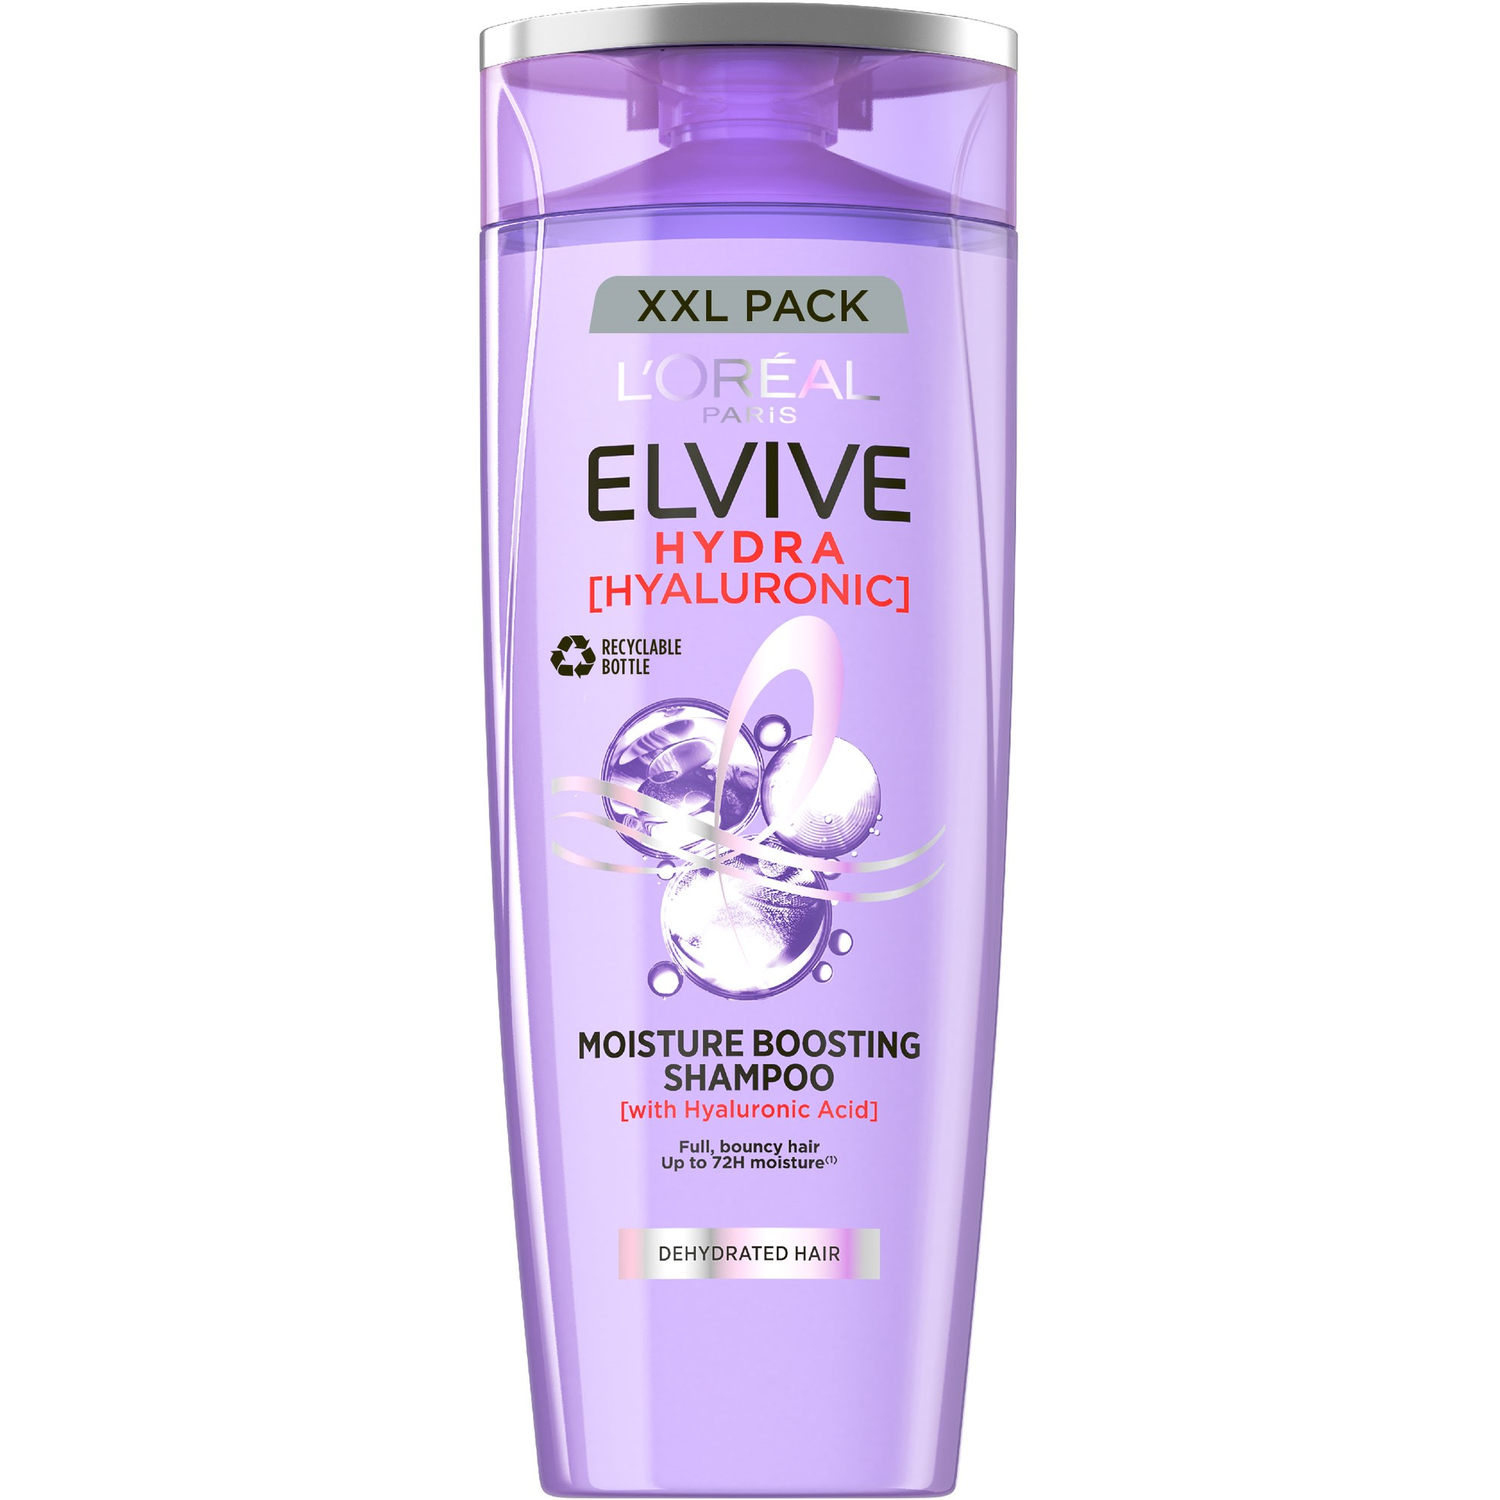 Elvive Hydra Hyaluronic Moisture Boosting Shampoo - Purple Image